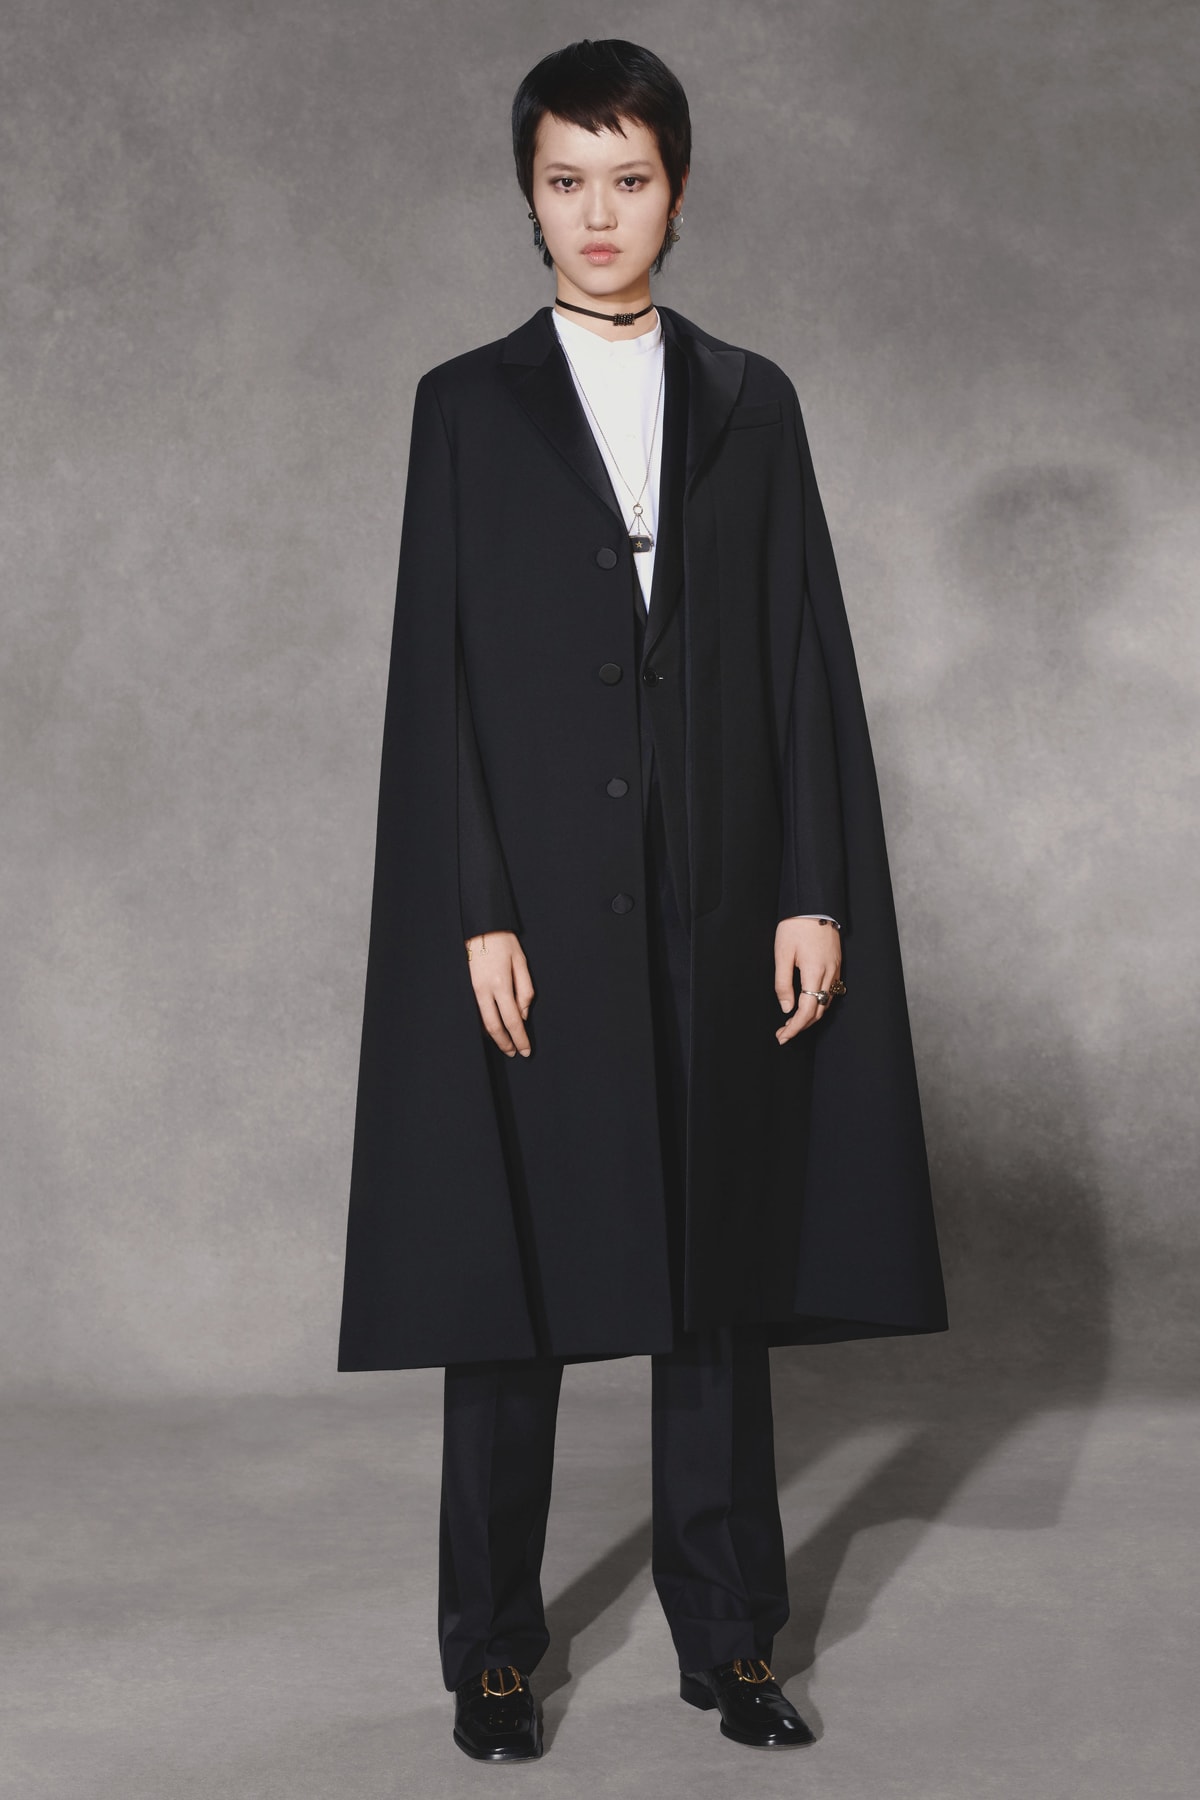 Dior Fall 2018 Collection Lookbook Oversized Blazer Black